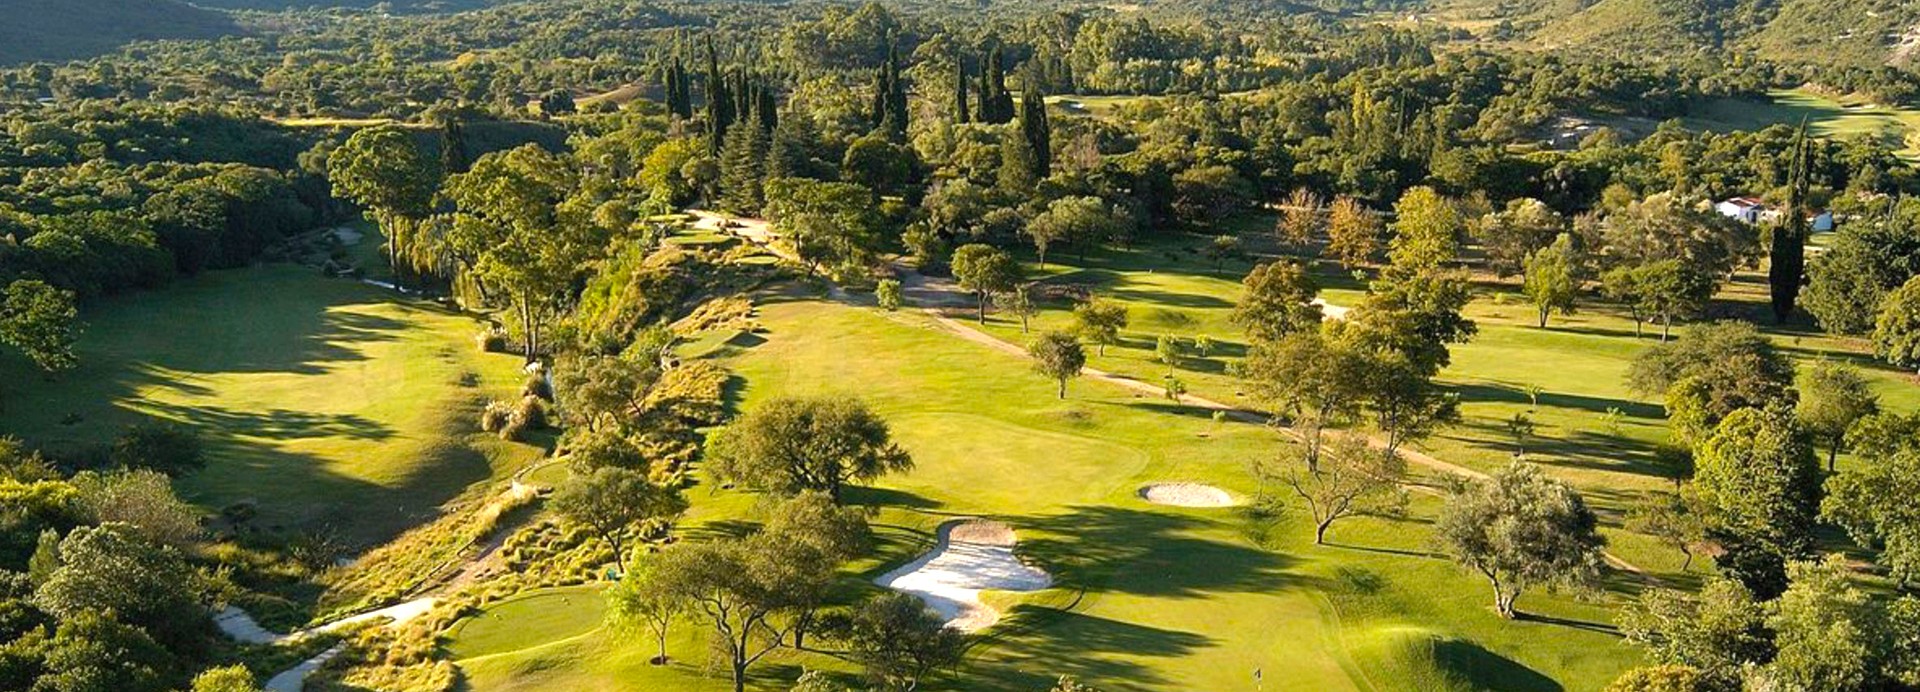 El Portrerillo de Larreta Resort & Country Club  | Golfové zájezdy, golfová dovolená, luxusní golf